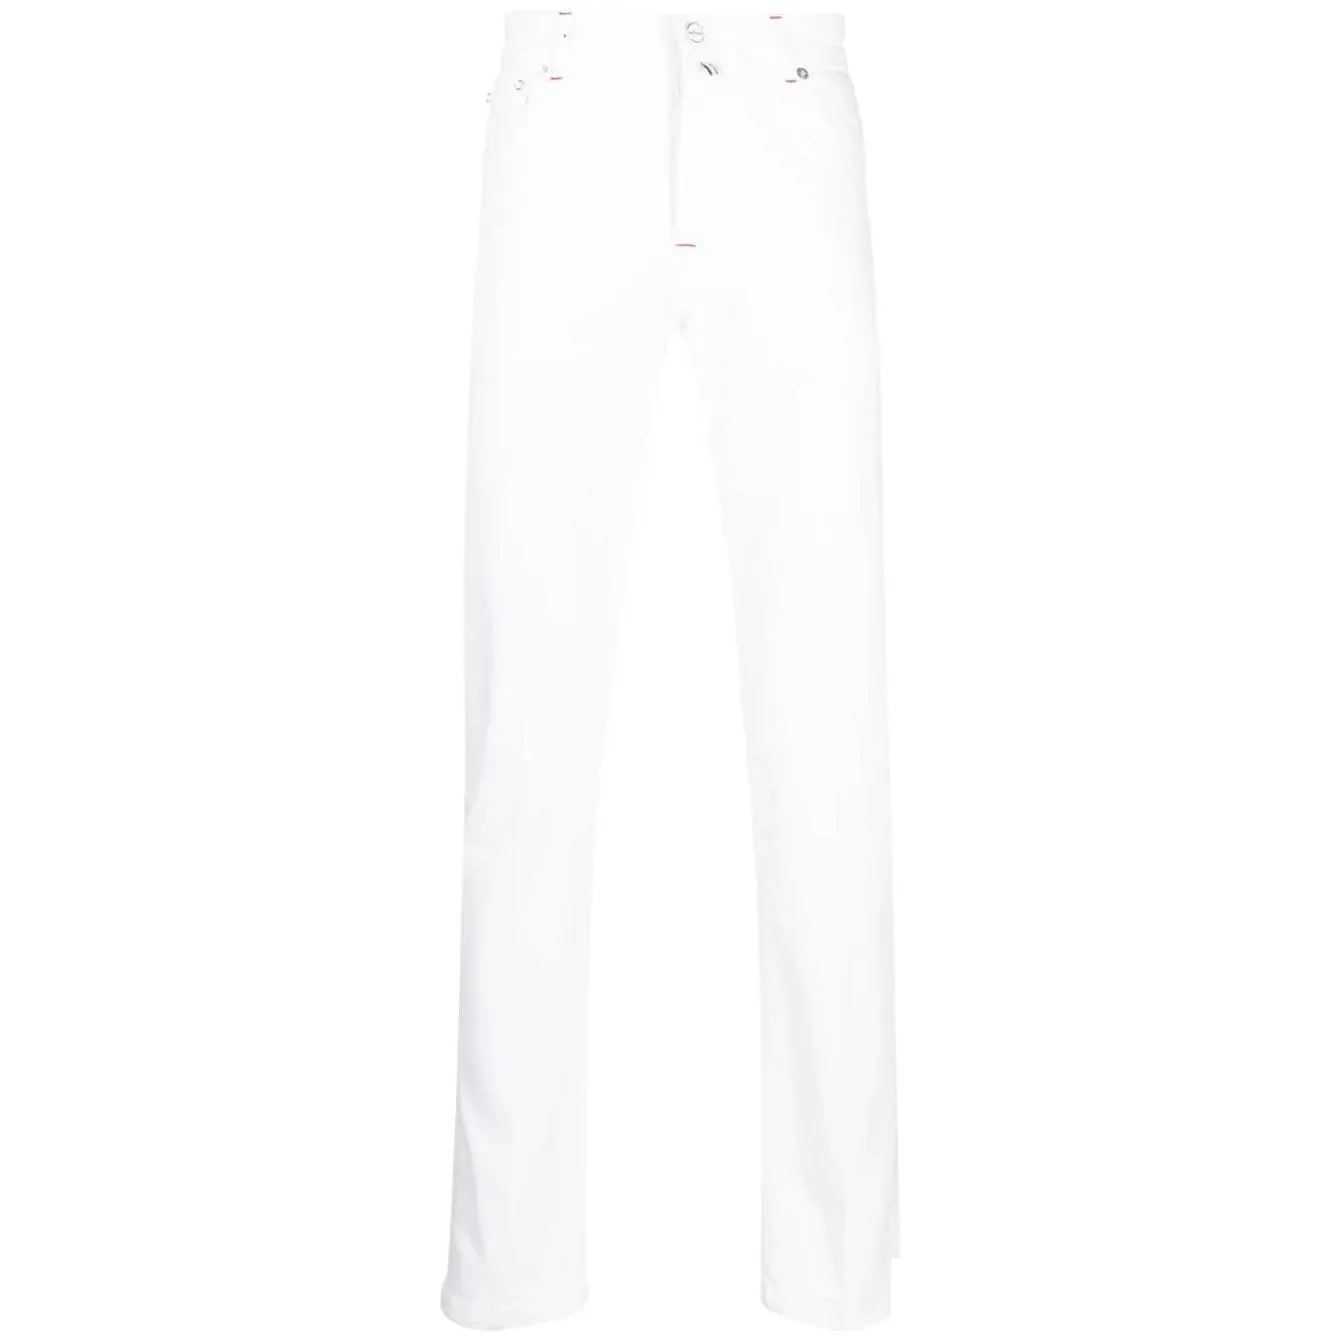 Jeans Mens Designer Kiton Mid-rise Straight-leg Jeans Spring Autumn Distrressed Long Pants for Man New Style White Denim Trousers